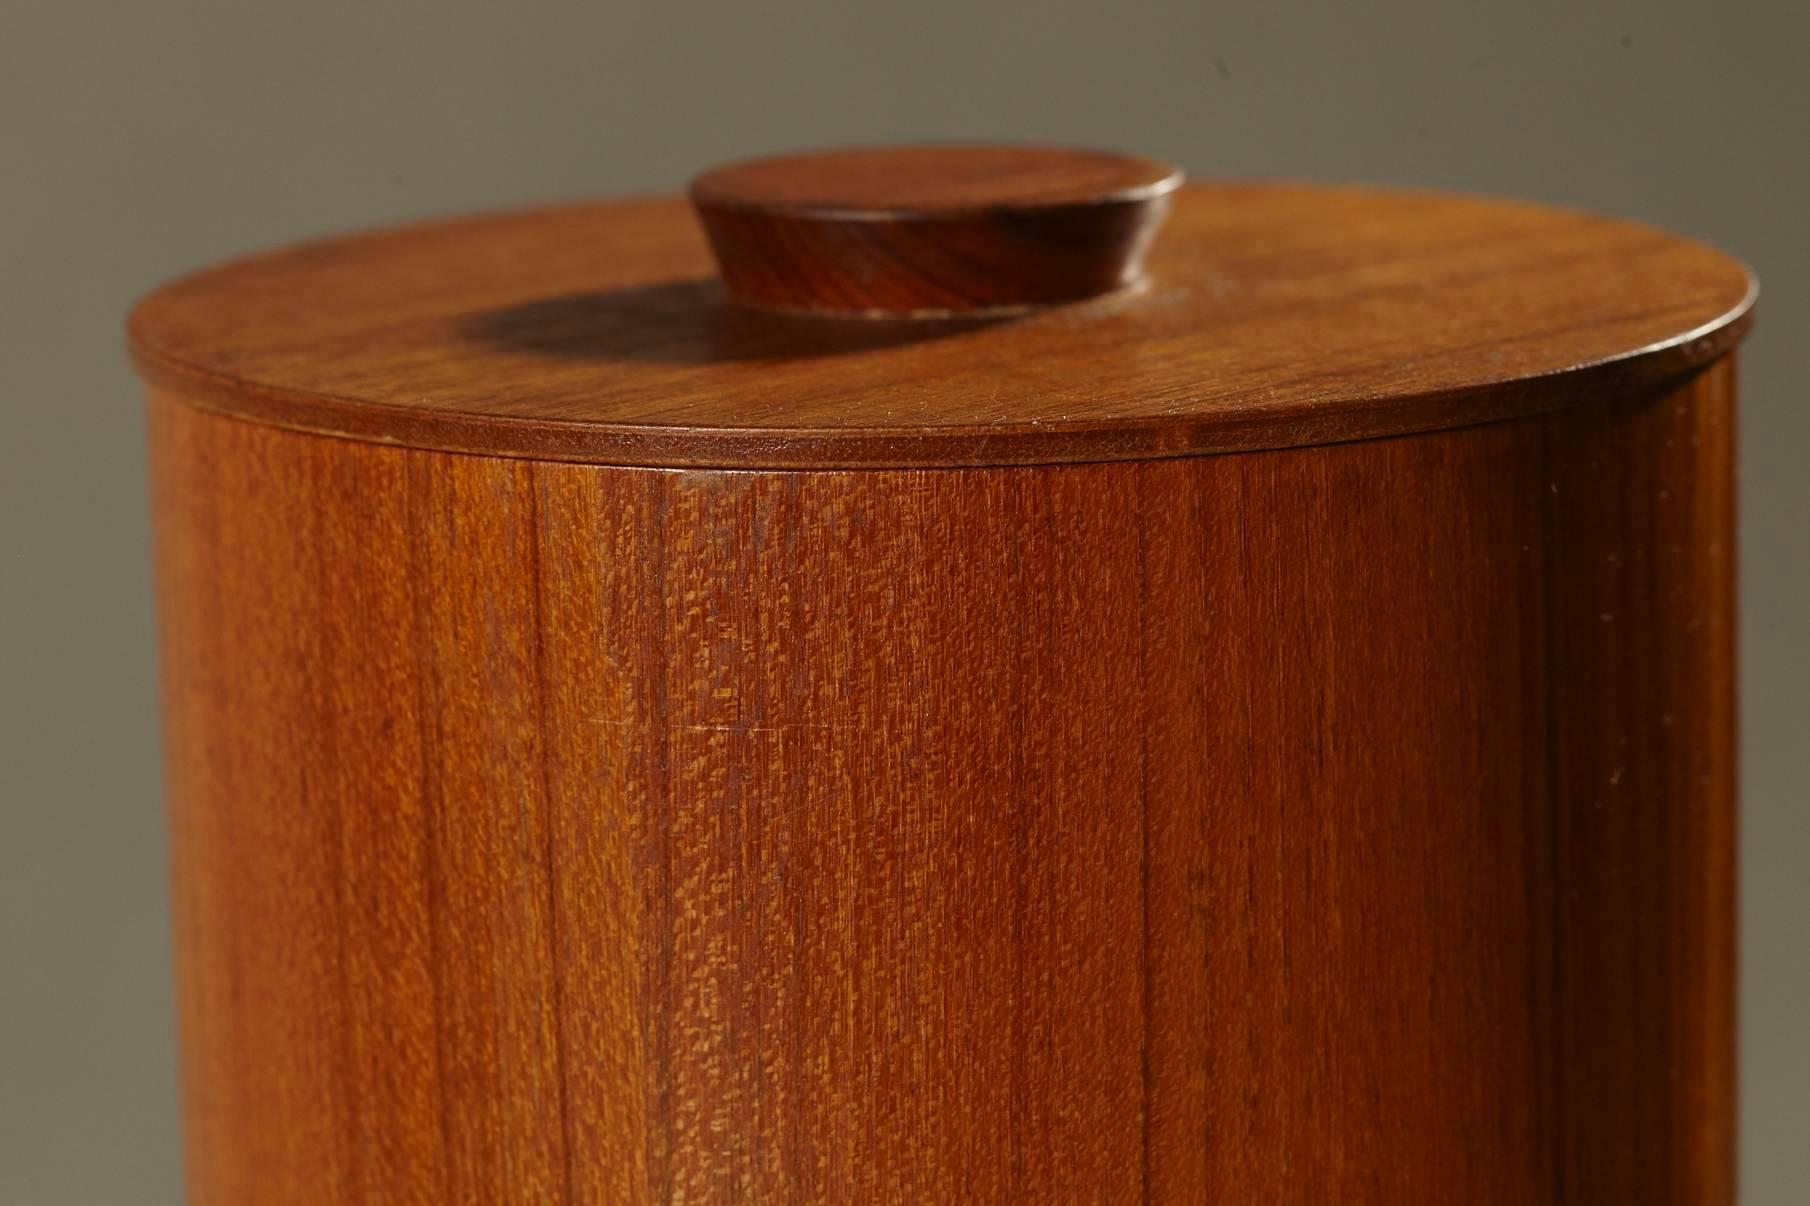 6.25”x6.25” ; no repairs // canister mid century Scandinavian design Vintage Danish modern lidded ROSEWOOD storage box Jar